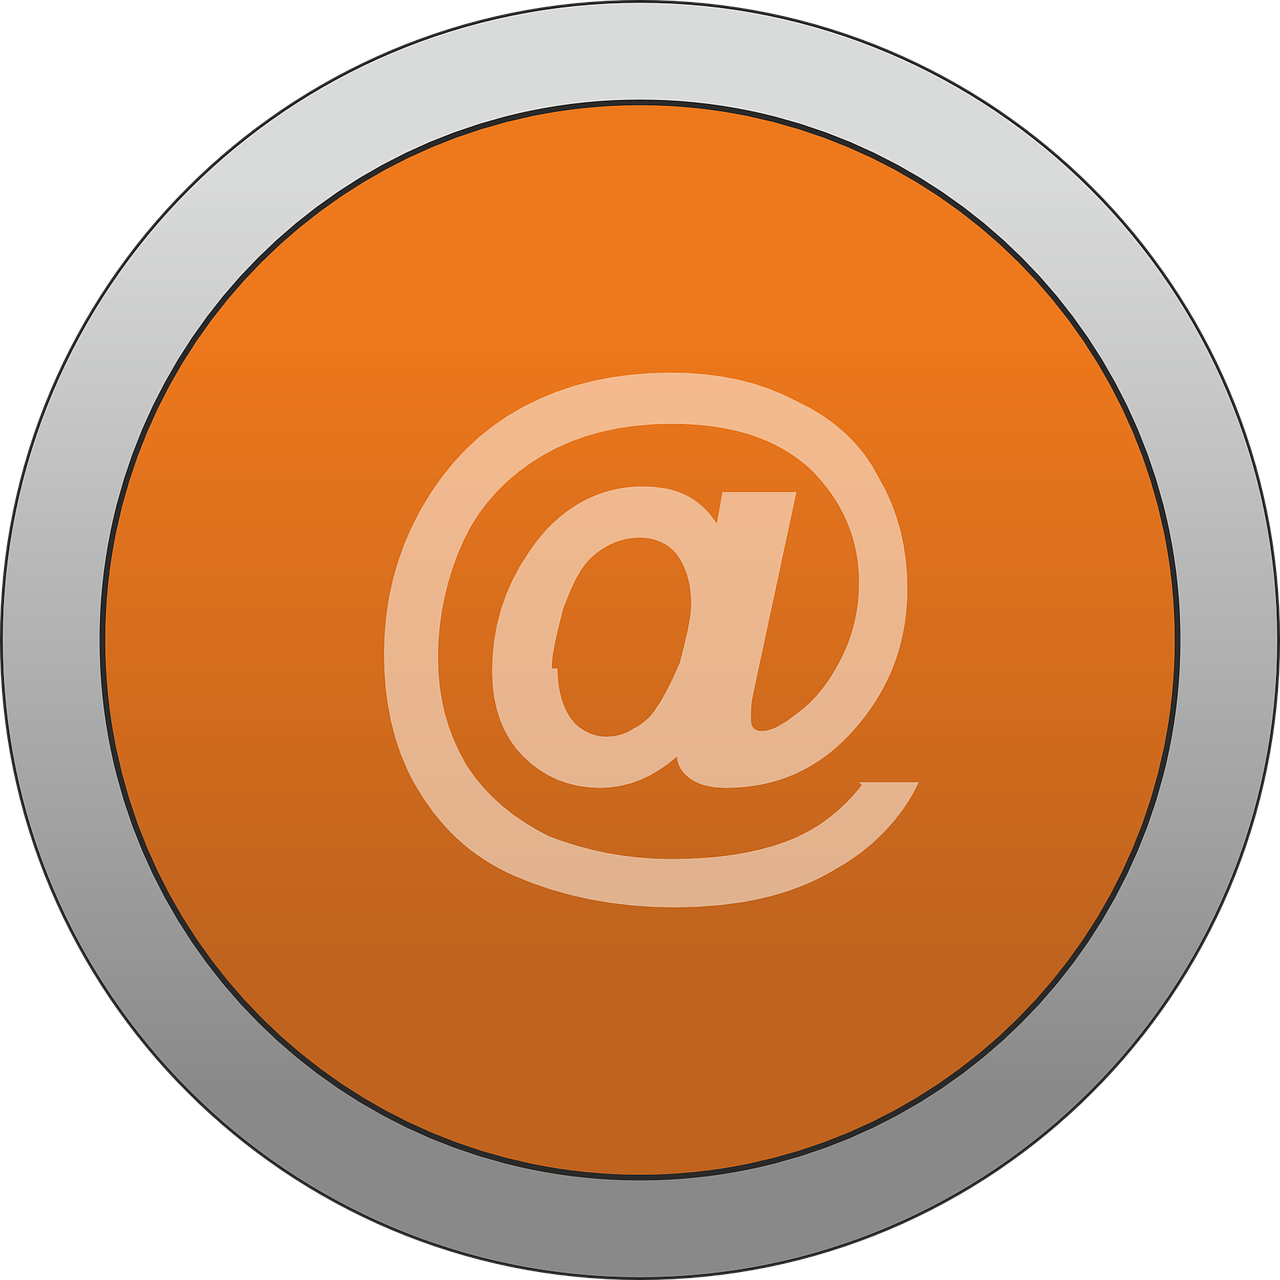 email button icon free photo